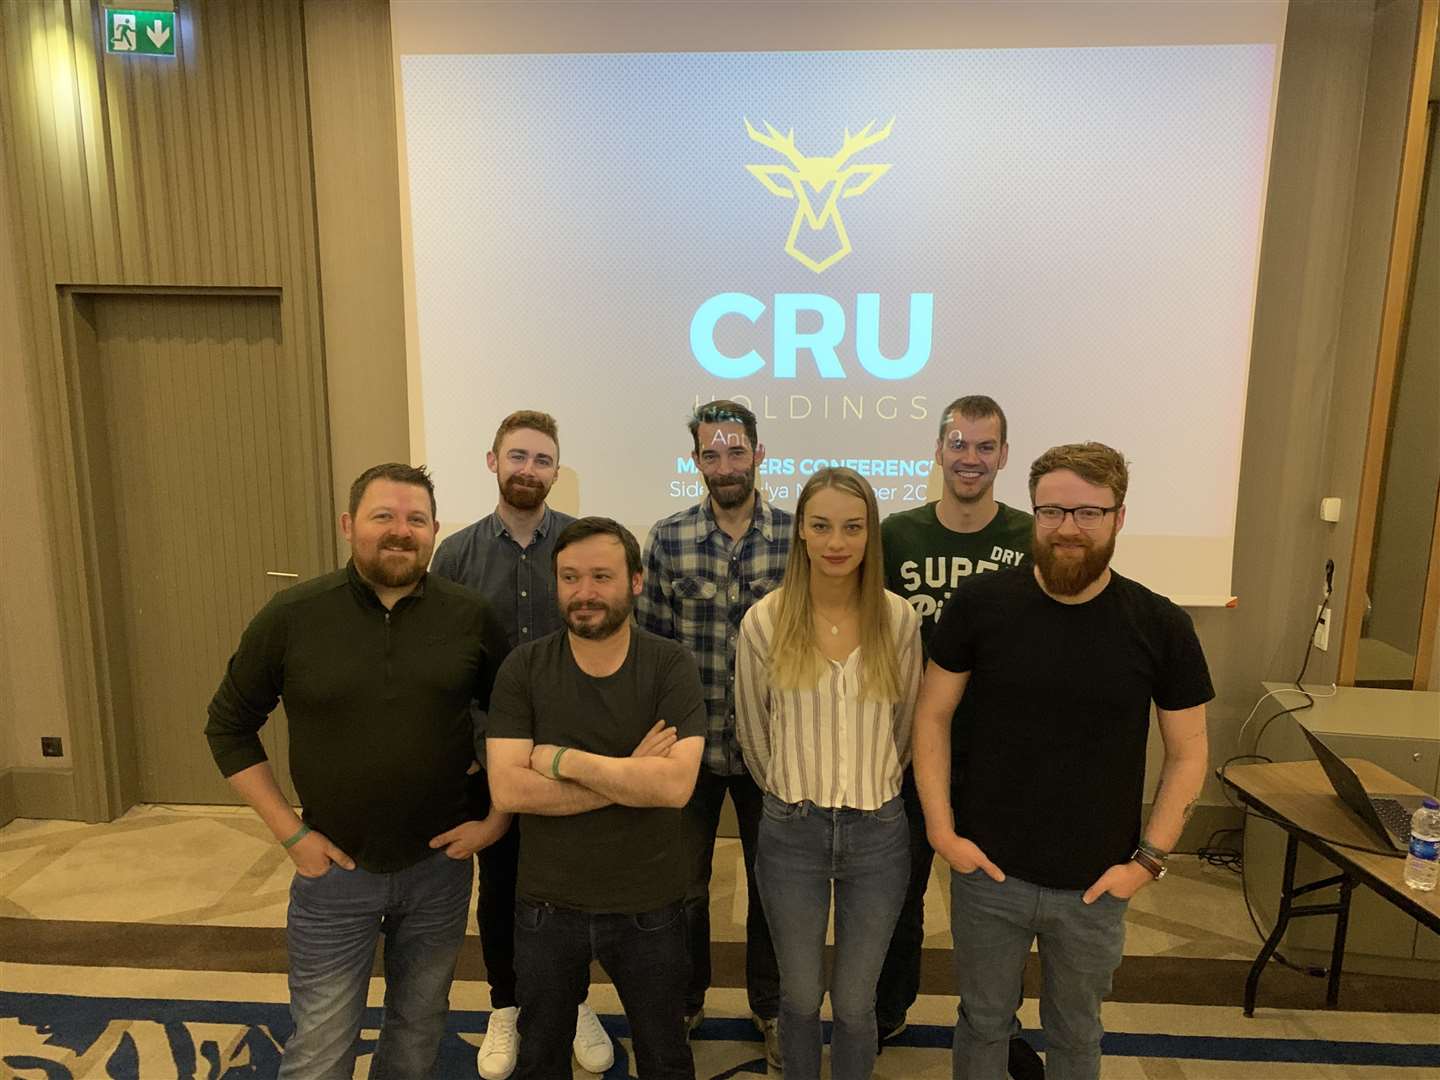 Cru's team (Back row, from left): Liam Reid, Simon Swinton, Ross Sharratt, (front row) Ken Loades, Alan Cumming, Evelina Bzezinskaja and Joe Martin.